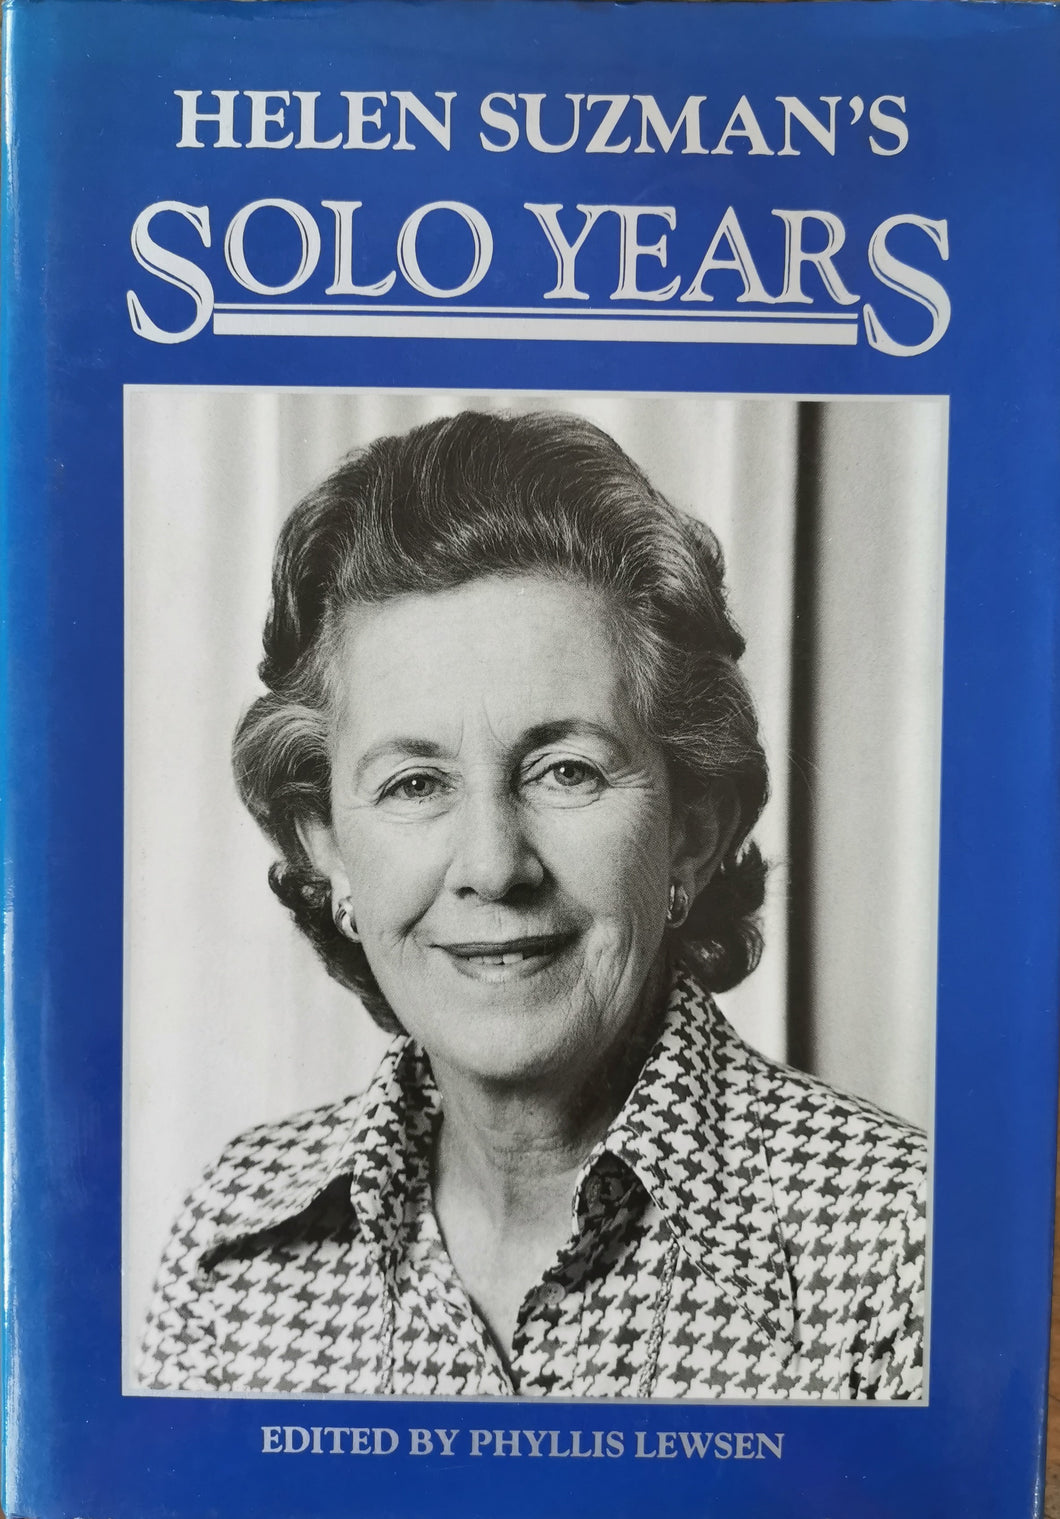 Helen Suzman's Solo Years - edited by Phyllis Lewsen